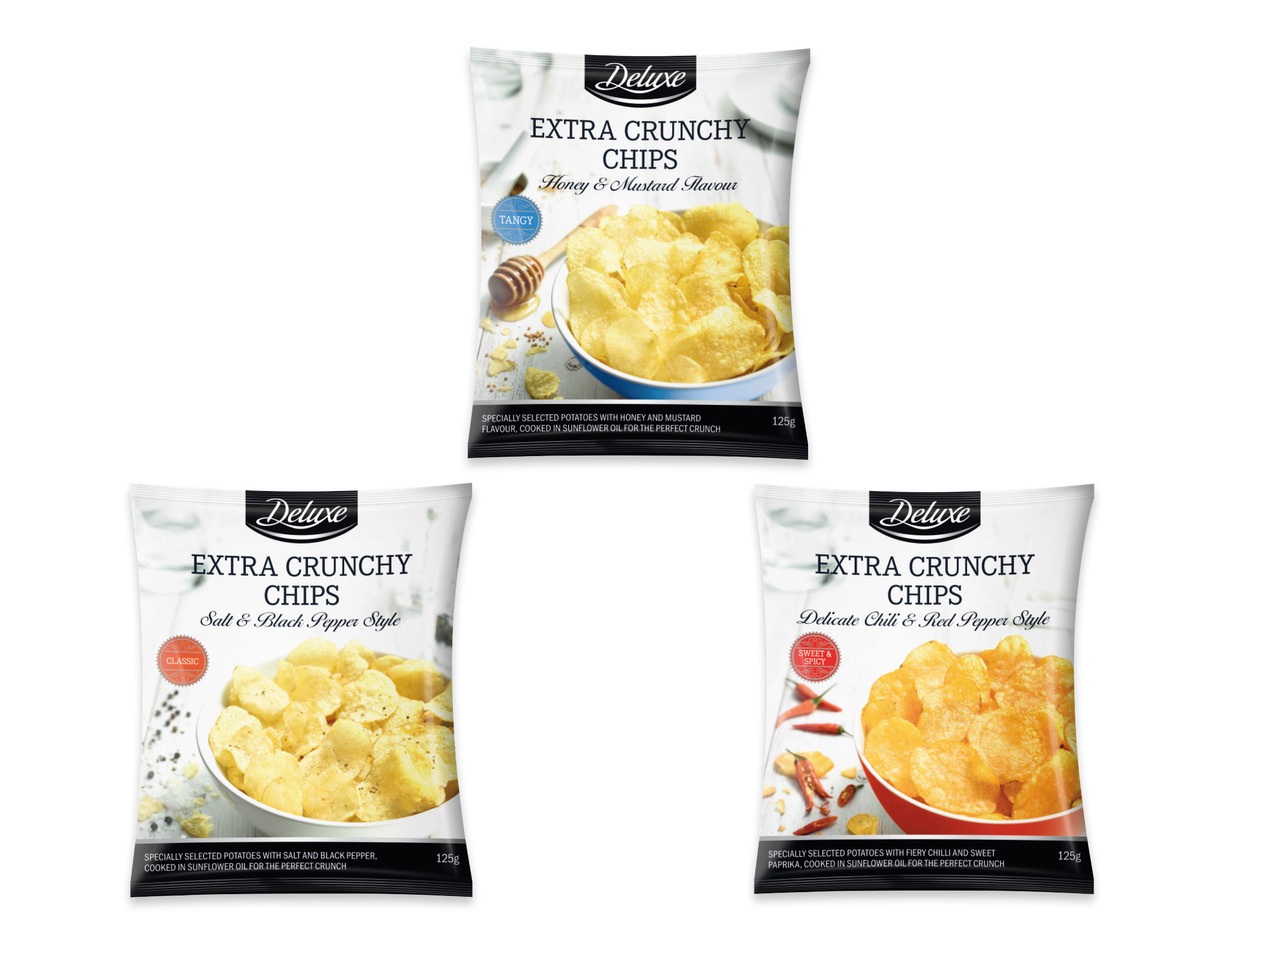 Grytfriterade chips